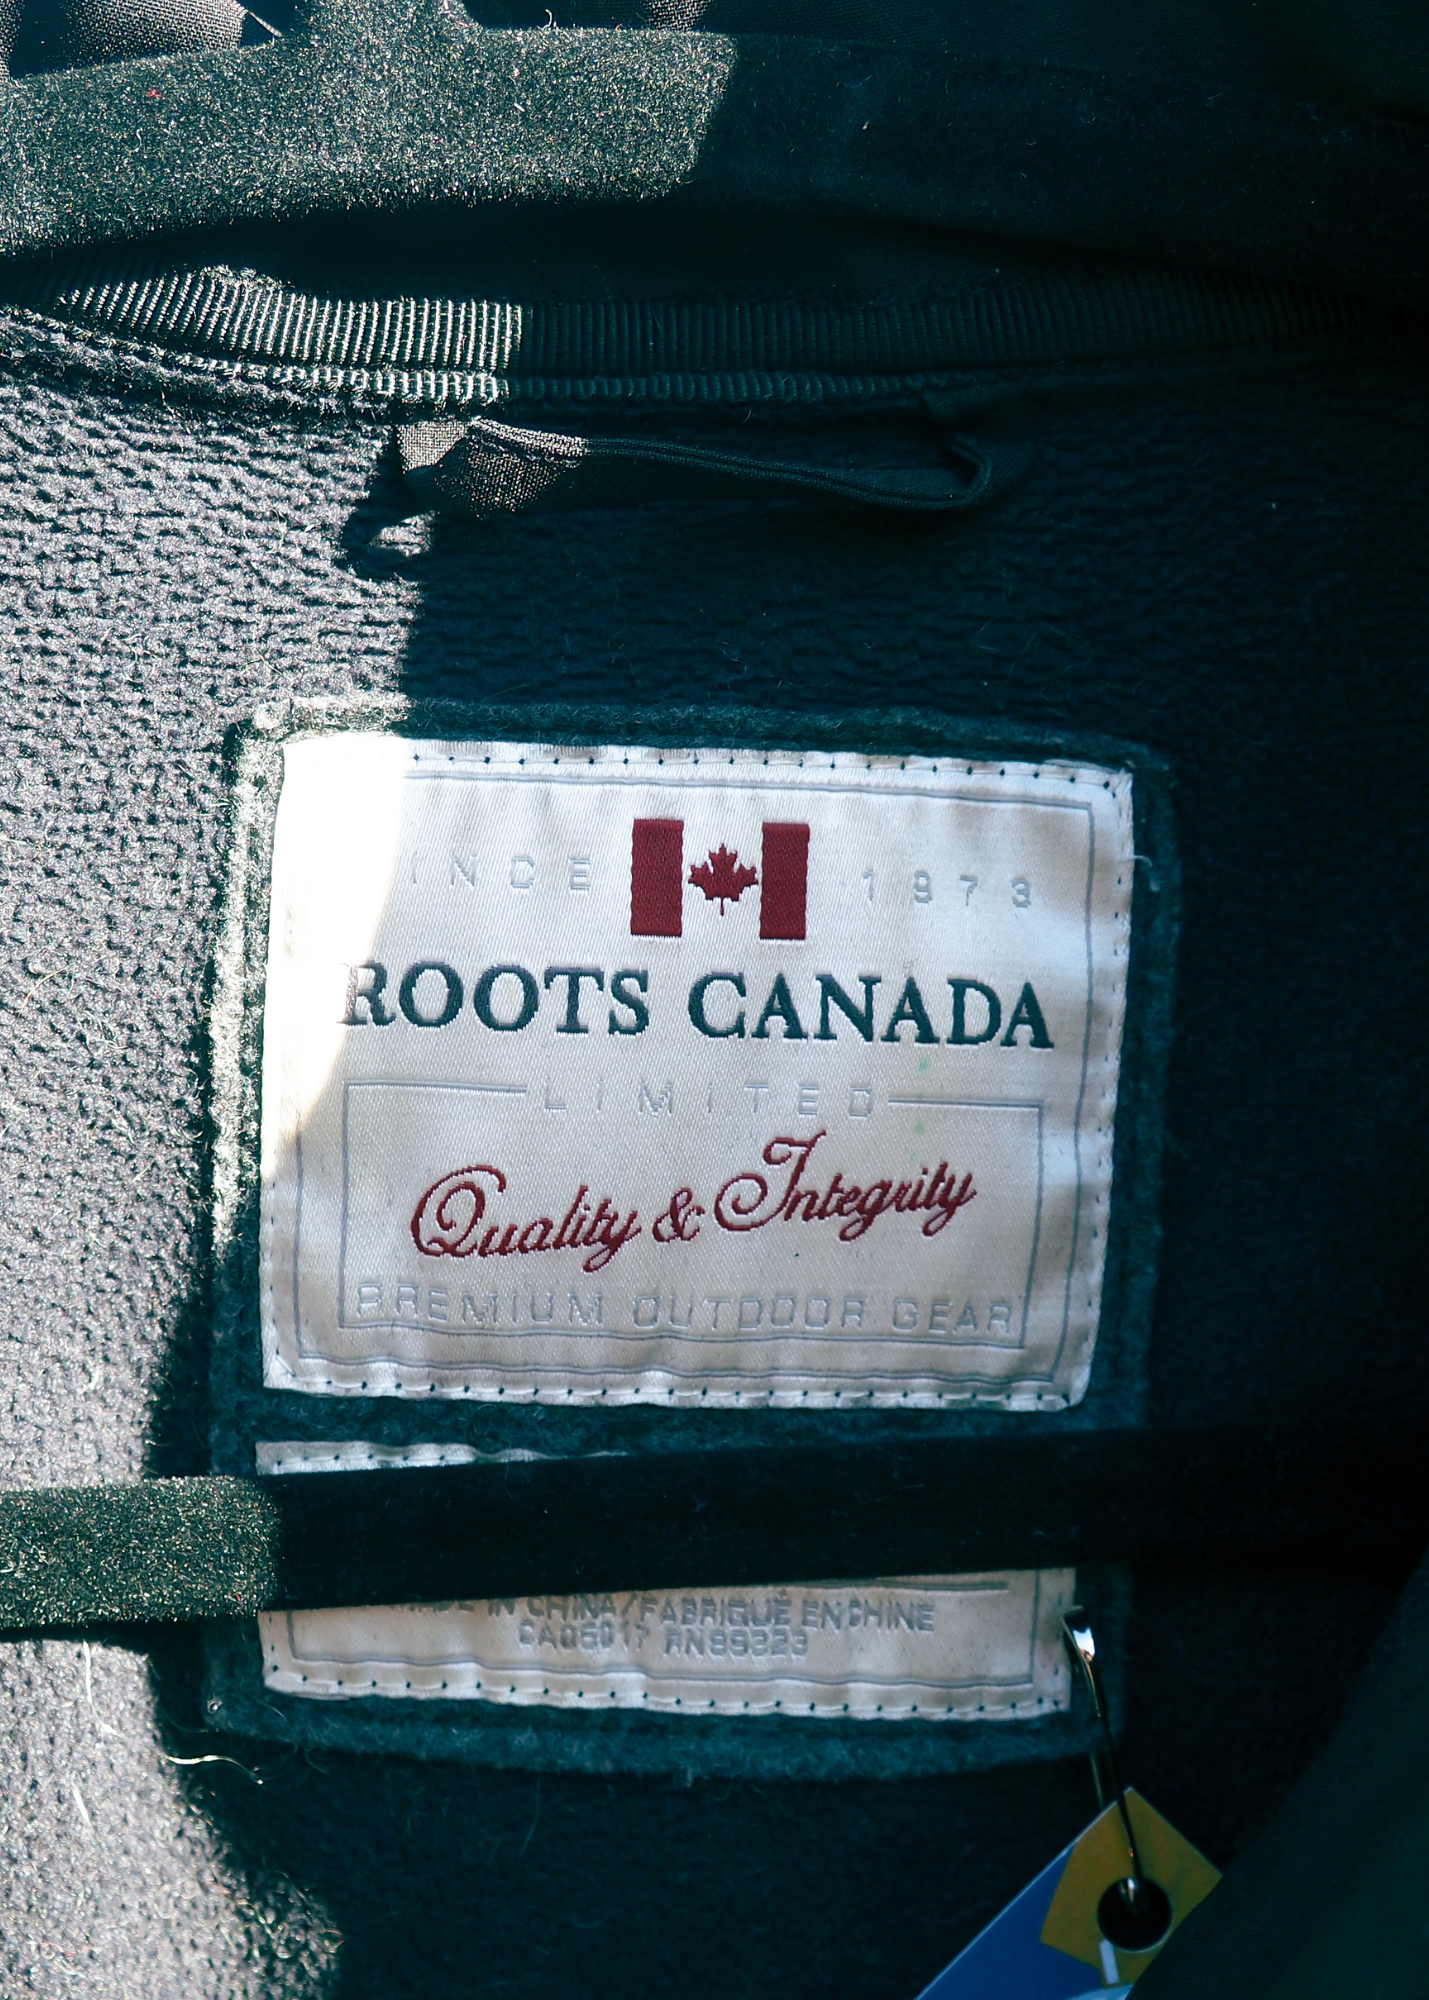 Chaqueta impermeable de Roots Canada *80 % de descuento*